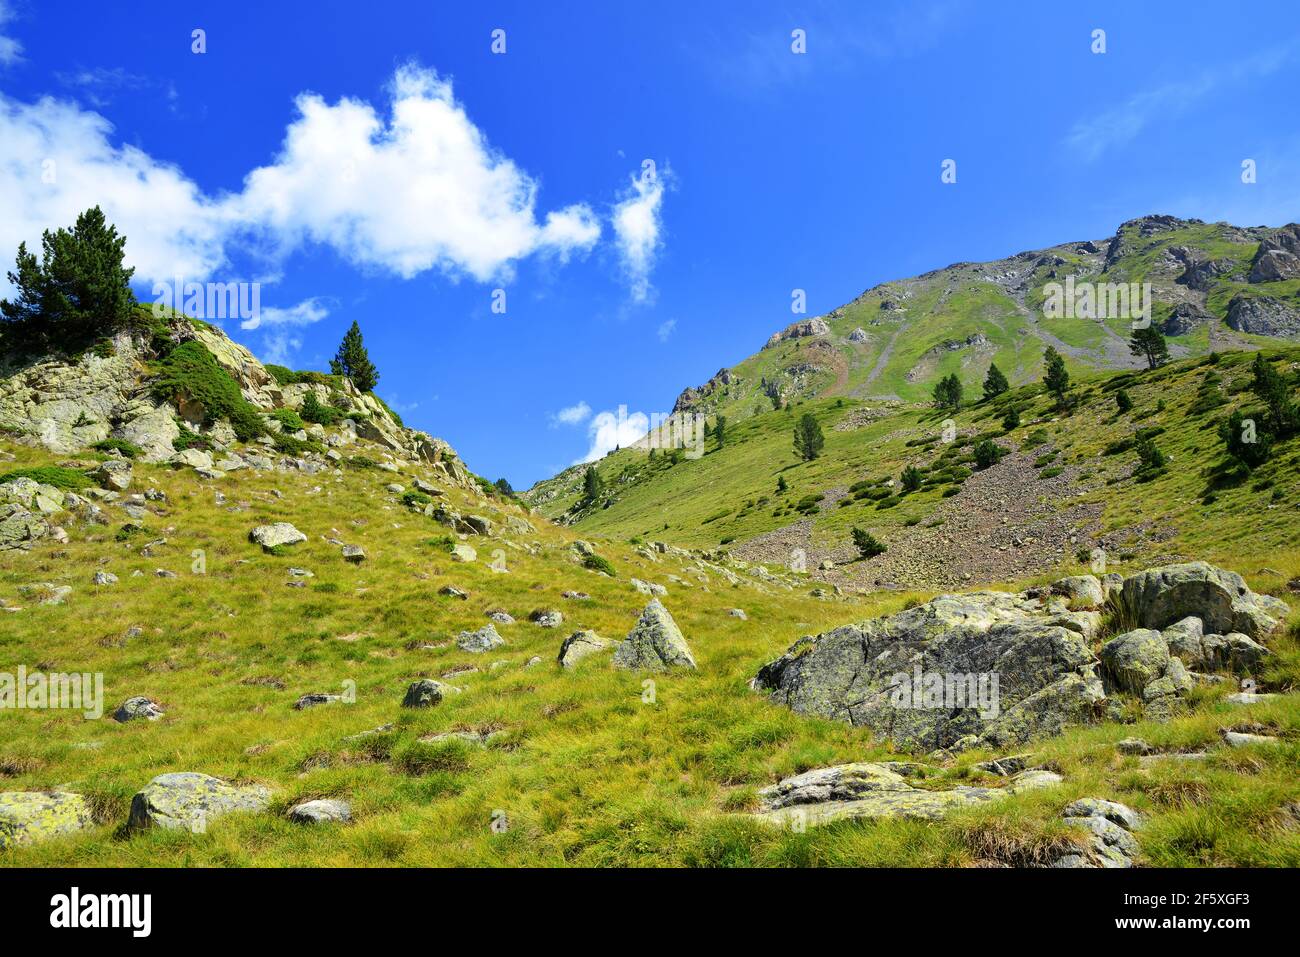 Hermoso paisaje de montaña en la reserva natural nacional de Neouvielle, Pirineo francés. Foto de stock